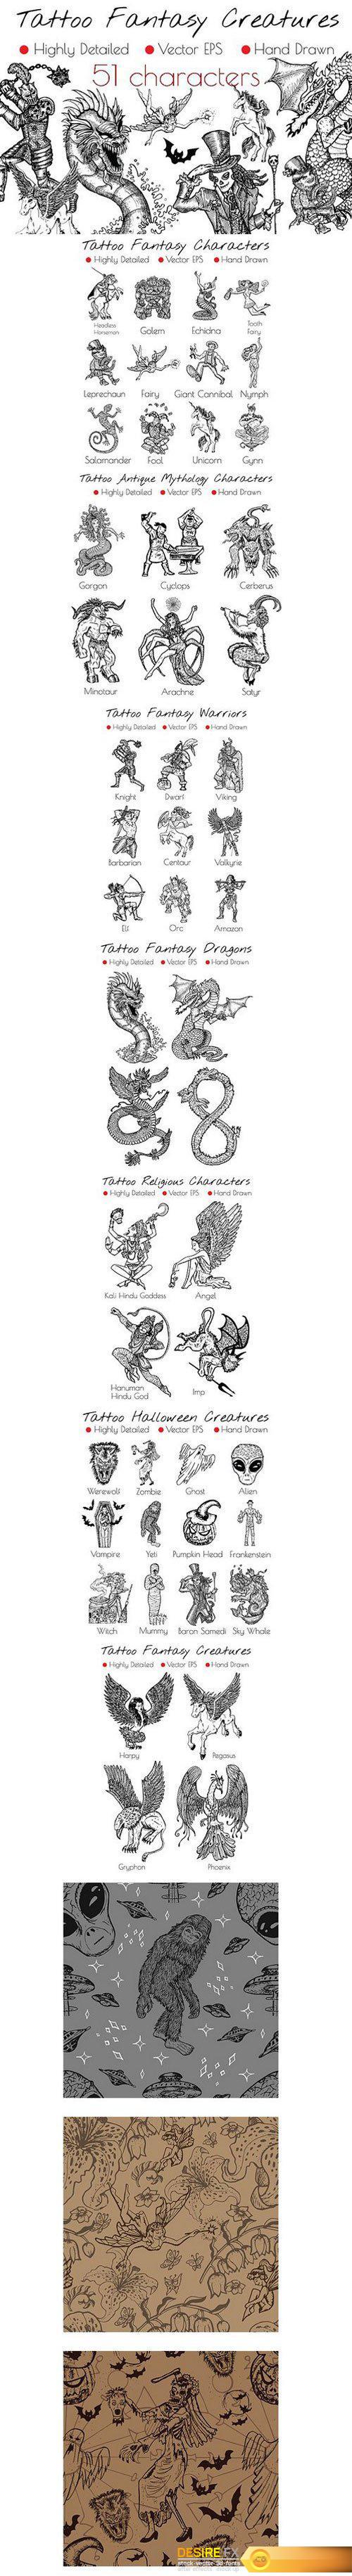 CM - Tattoo Fantasy Characters 1412858